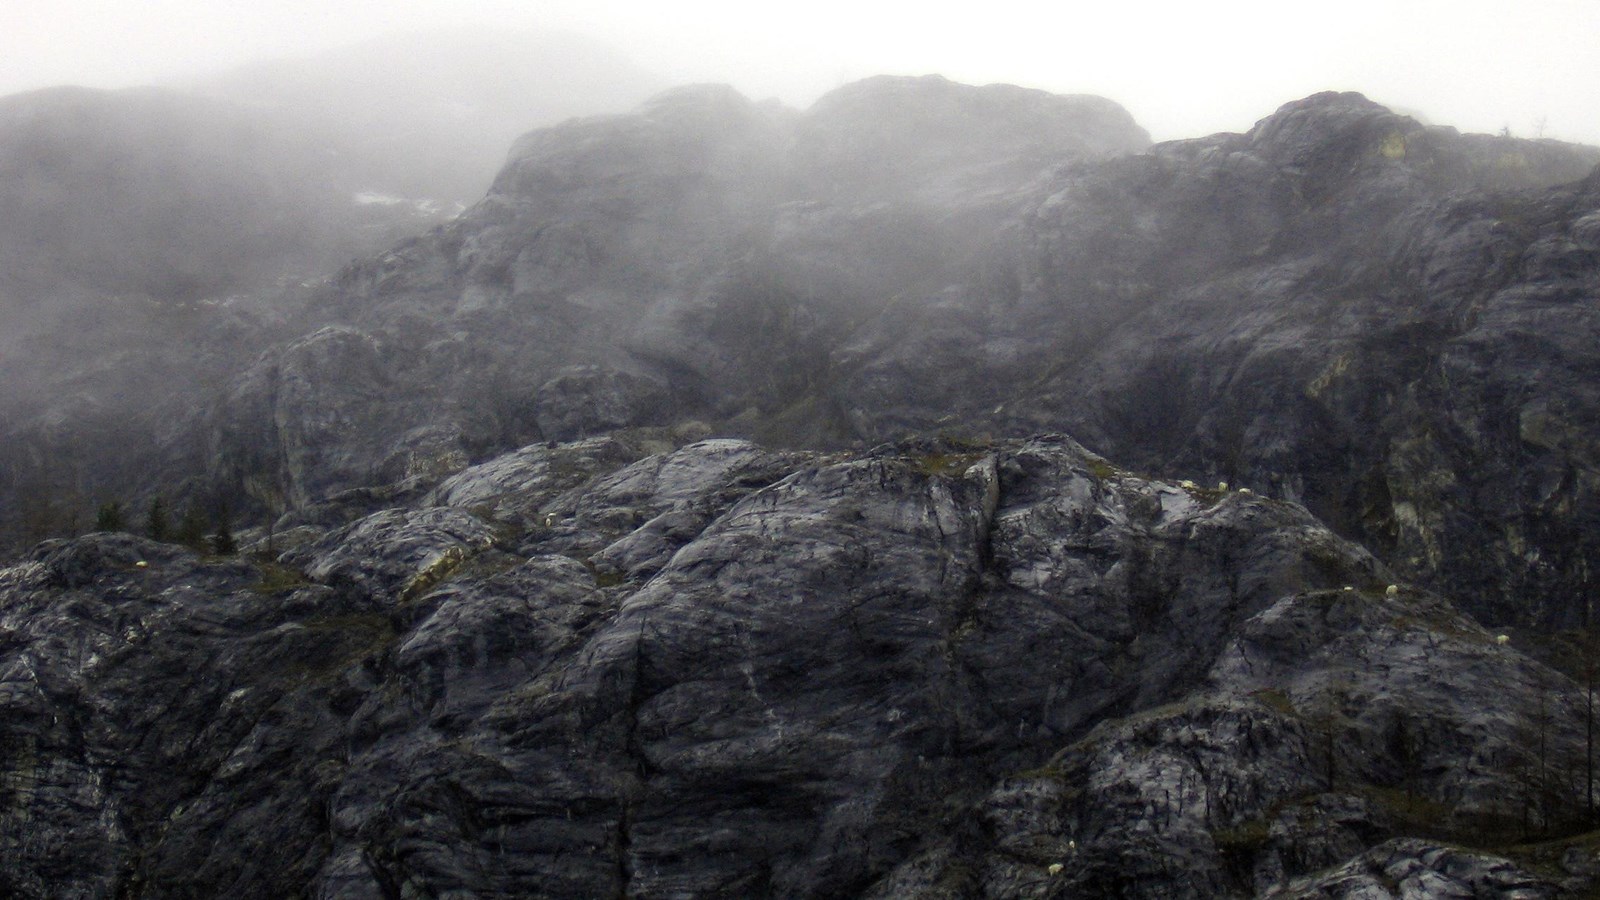 Fog descending on mountain goats atop the rocky ridges of Gloomy Knob.